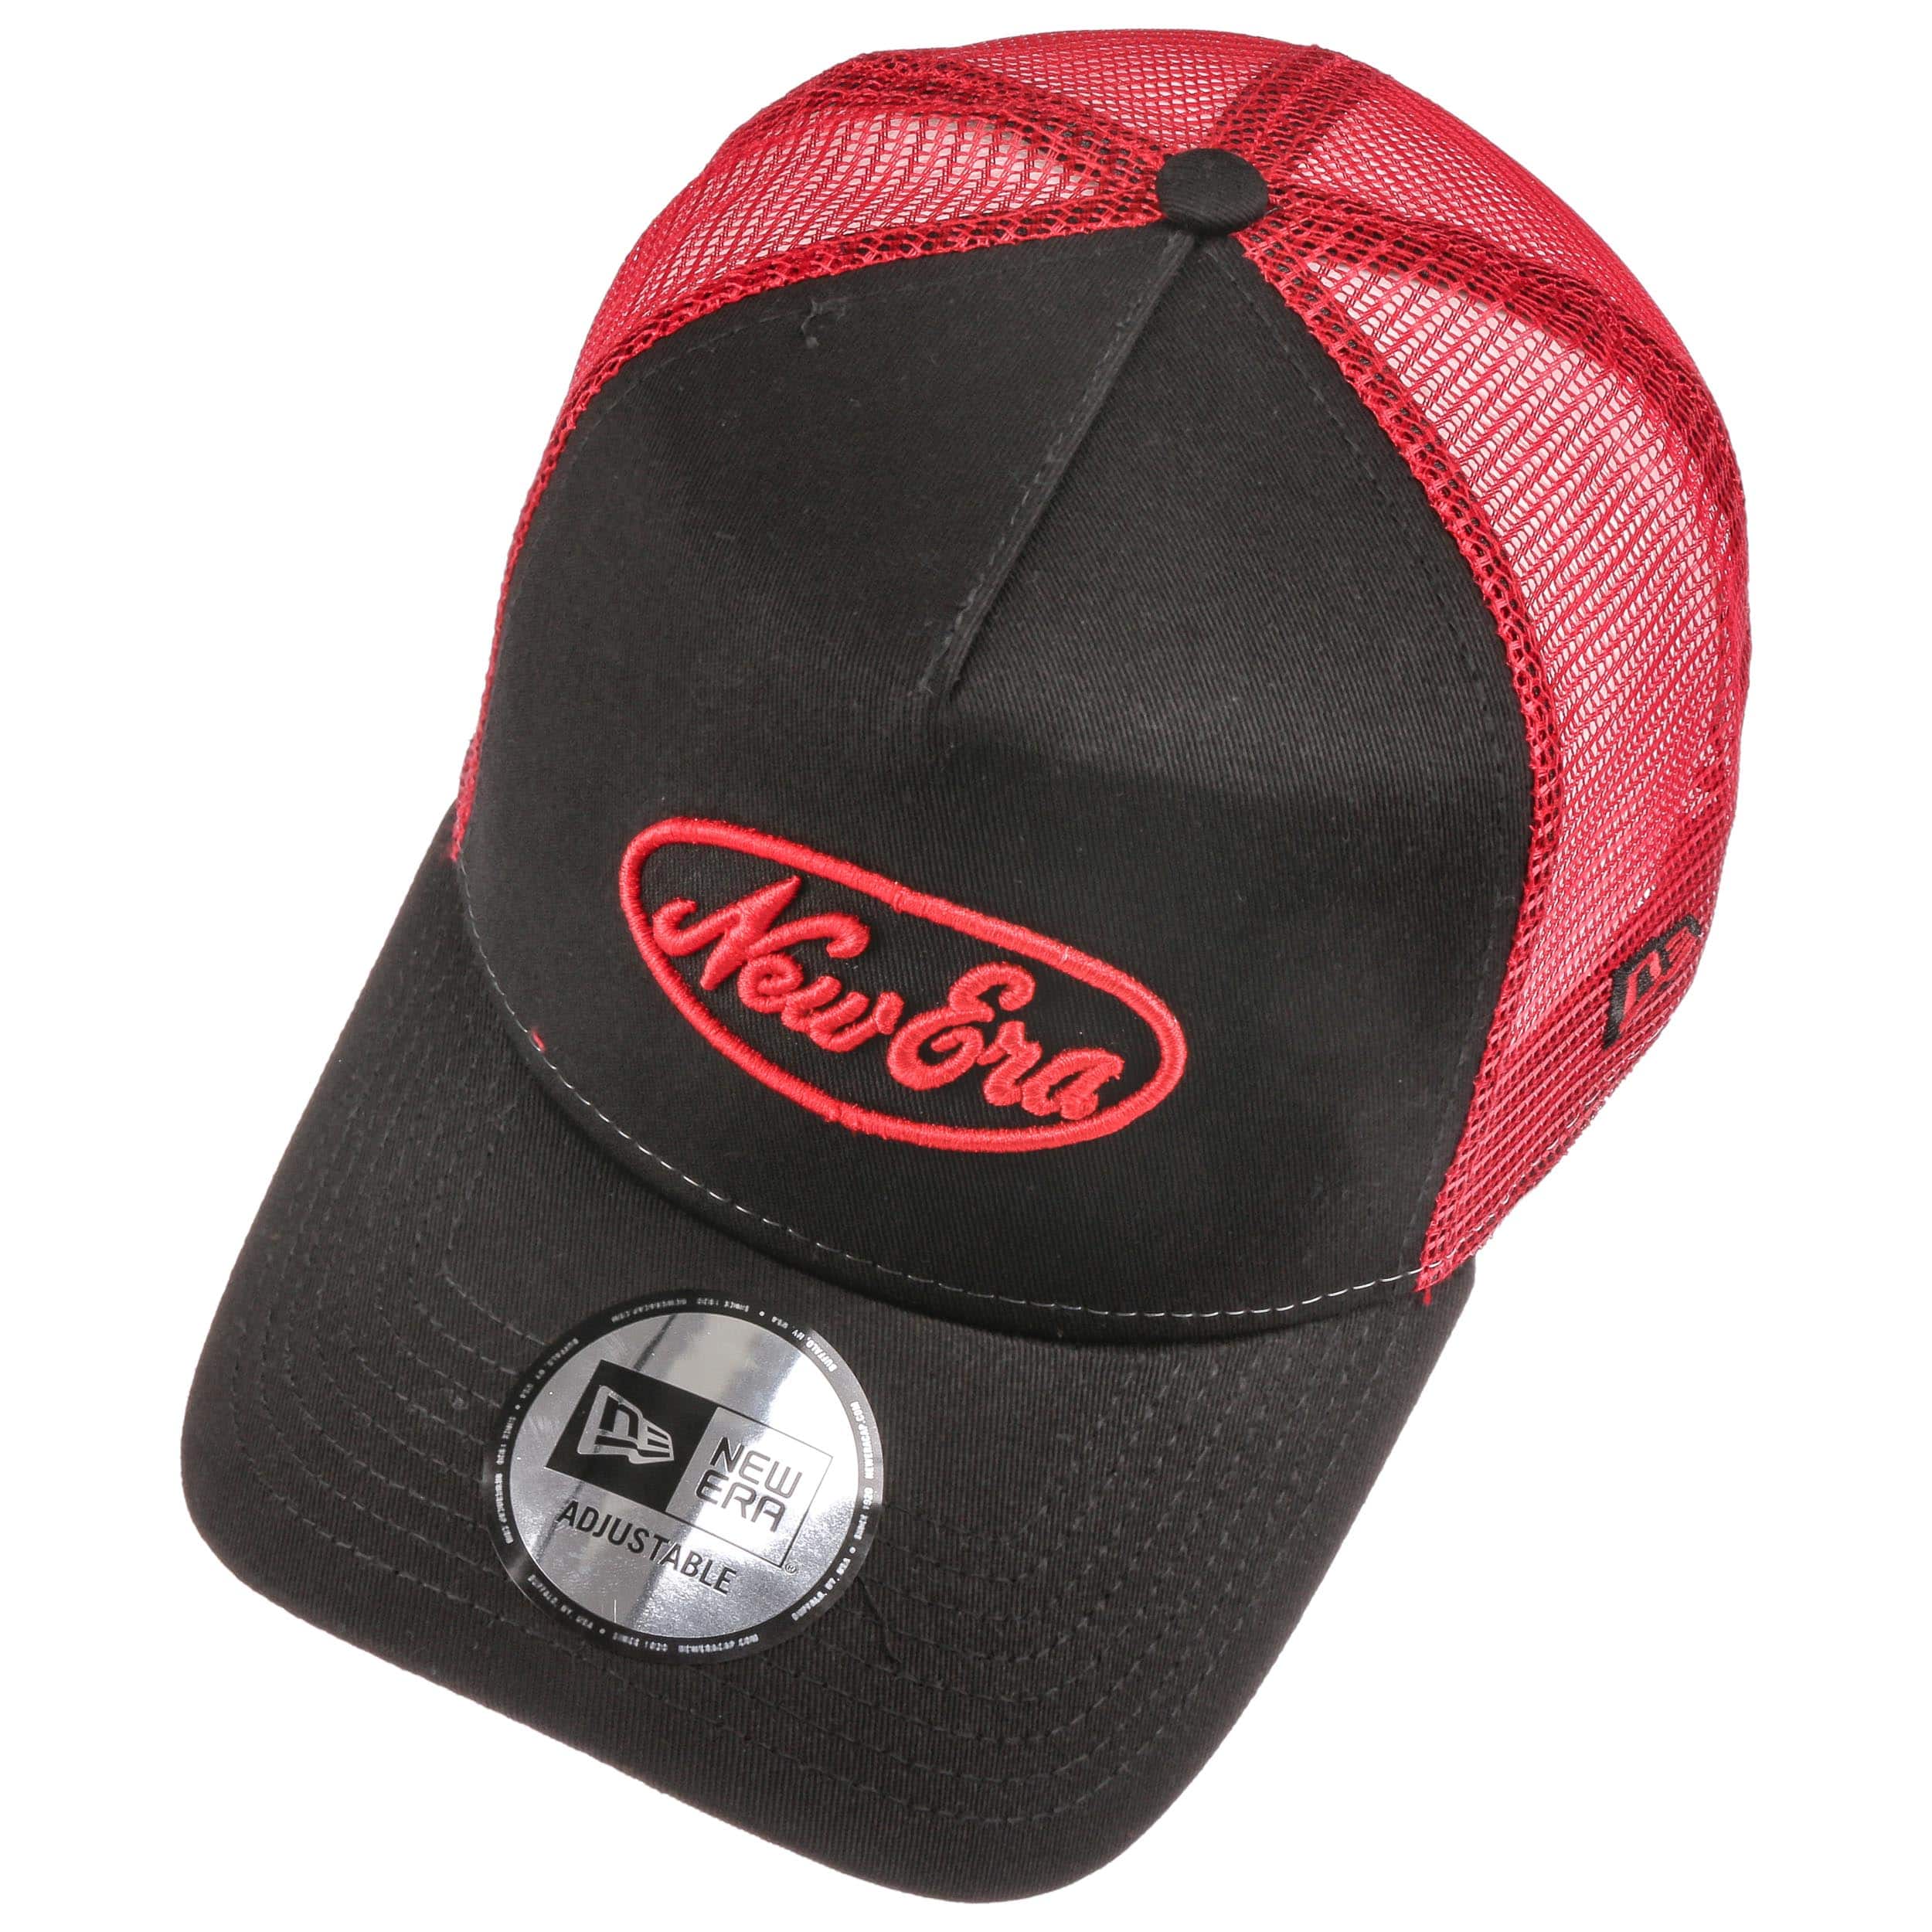 Oval New Era black/red trucker cap